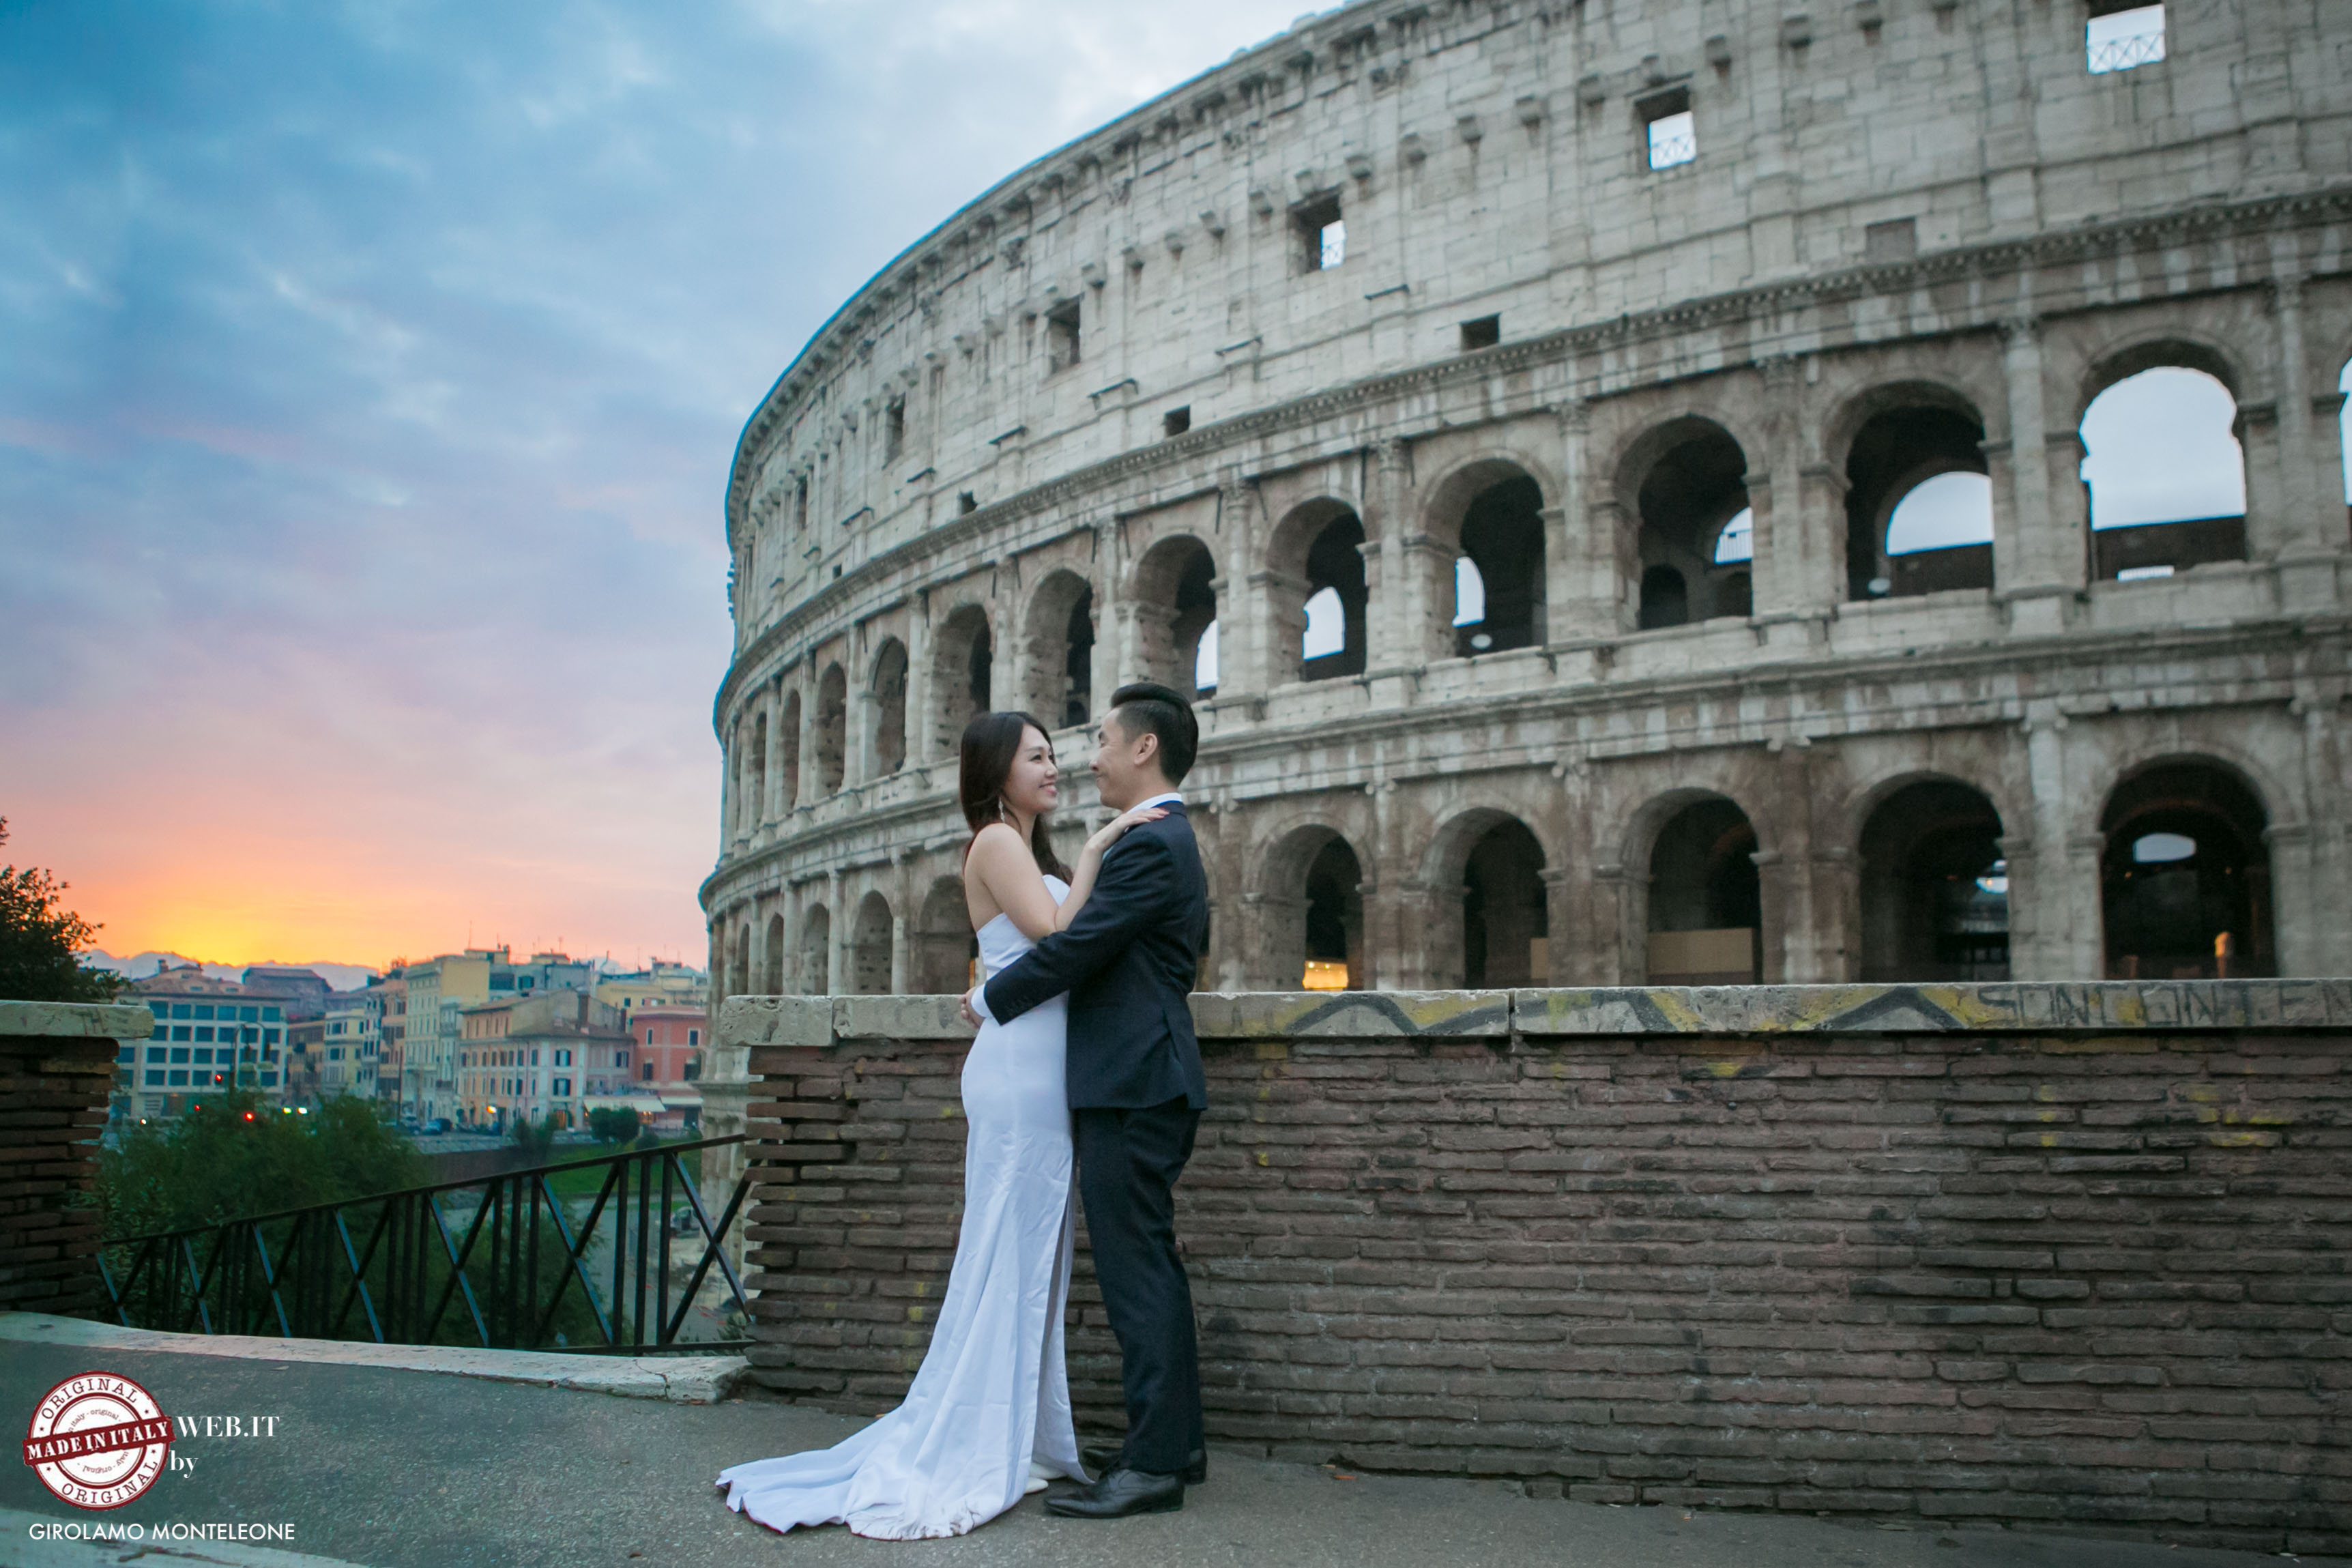 from Singapore to Italy, photo shoot around Rome